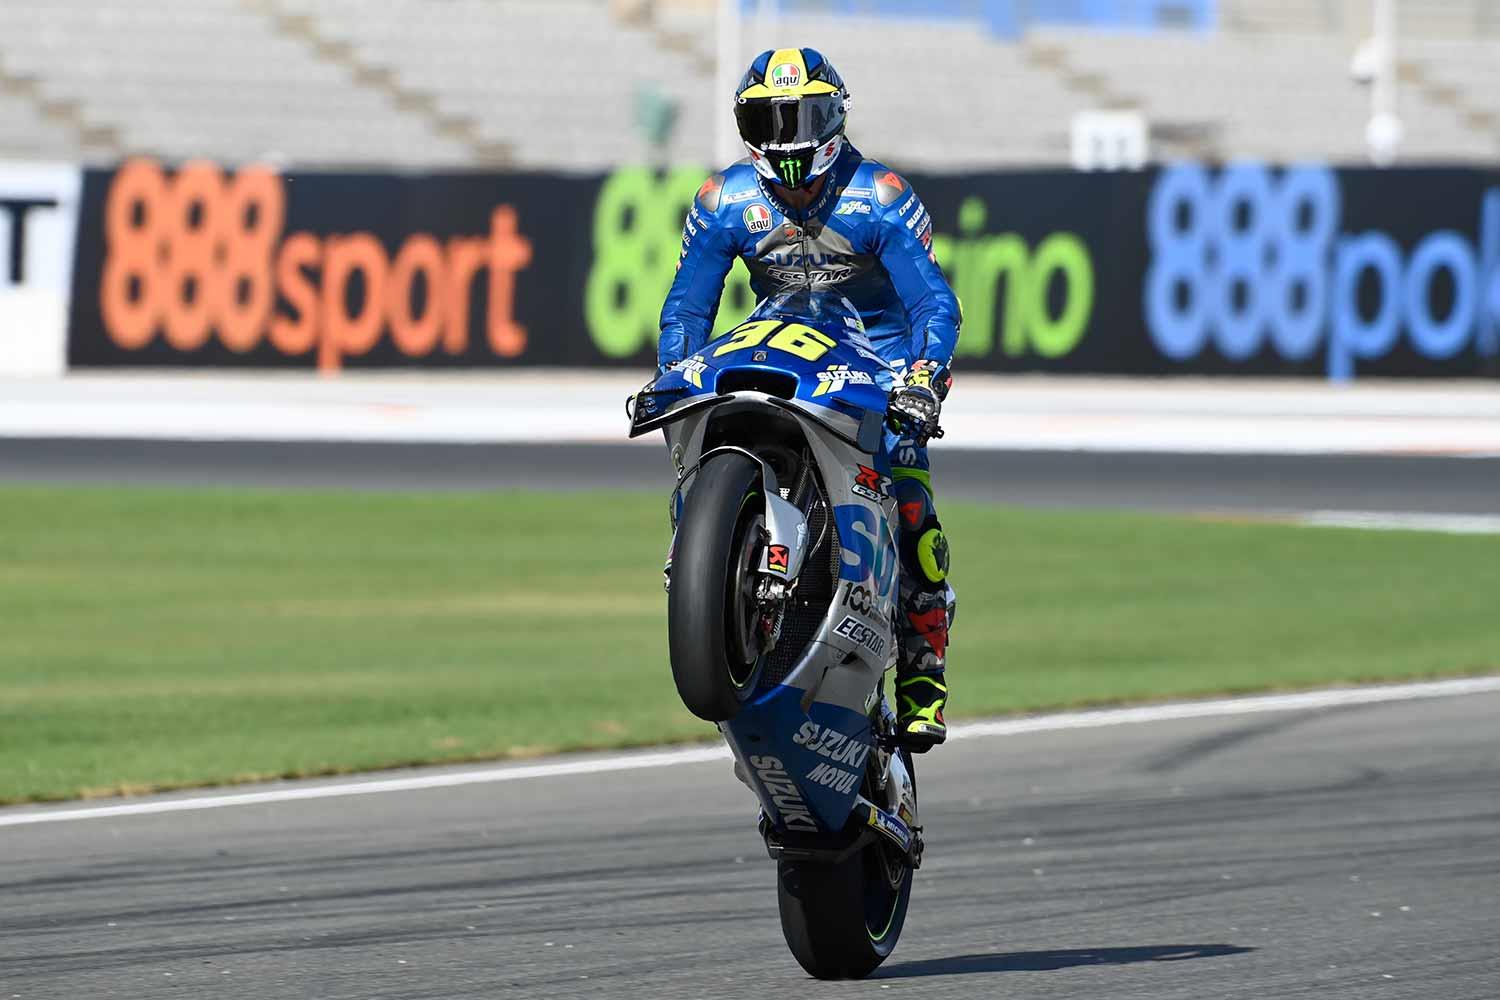 Joan Mir clocks a win for Suzuki in MotoGP's 2020 efforts. Media sourced from MCN.